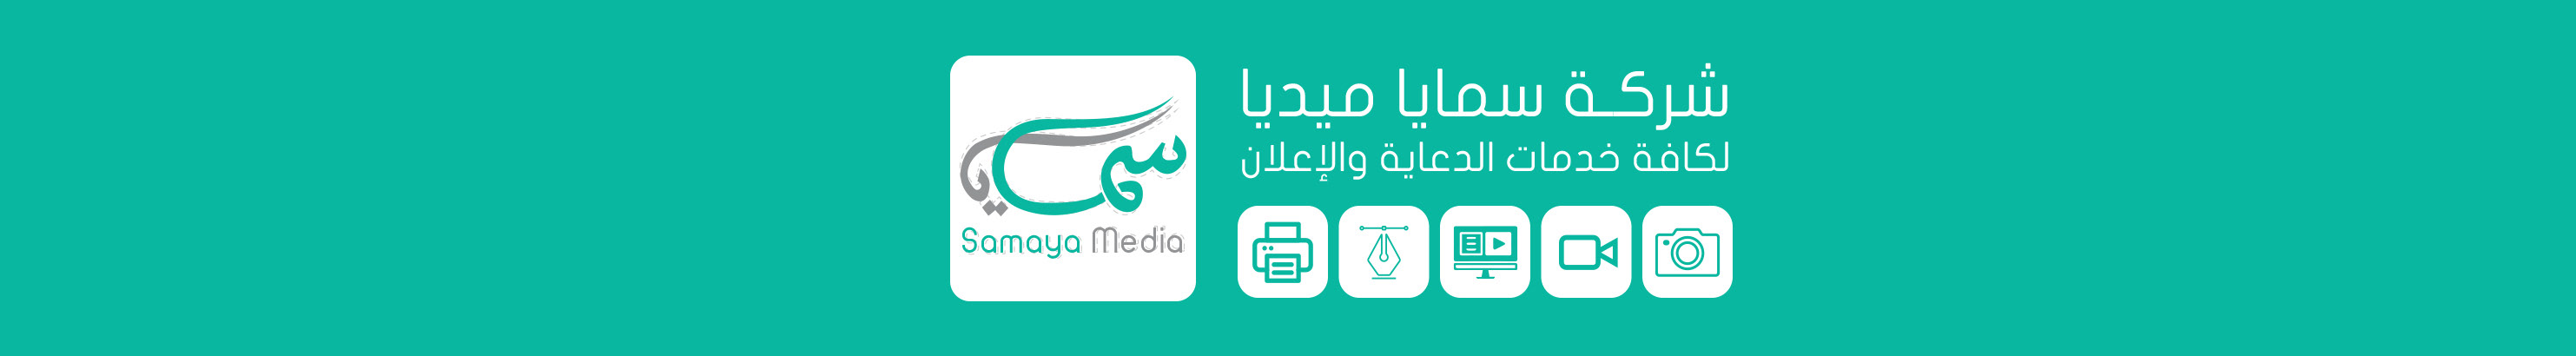 samaya media のプロファイルバナー